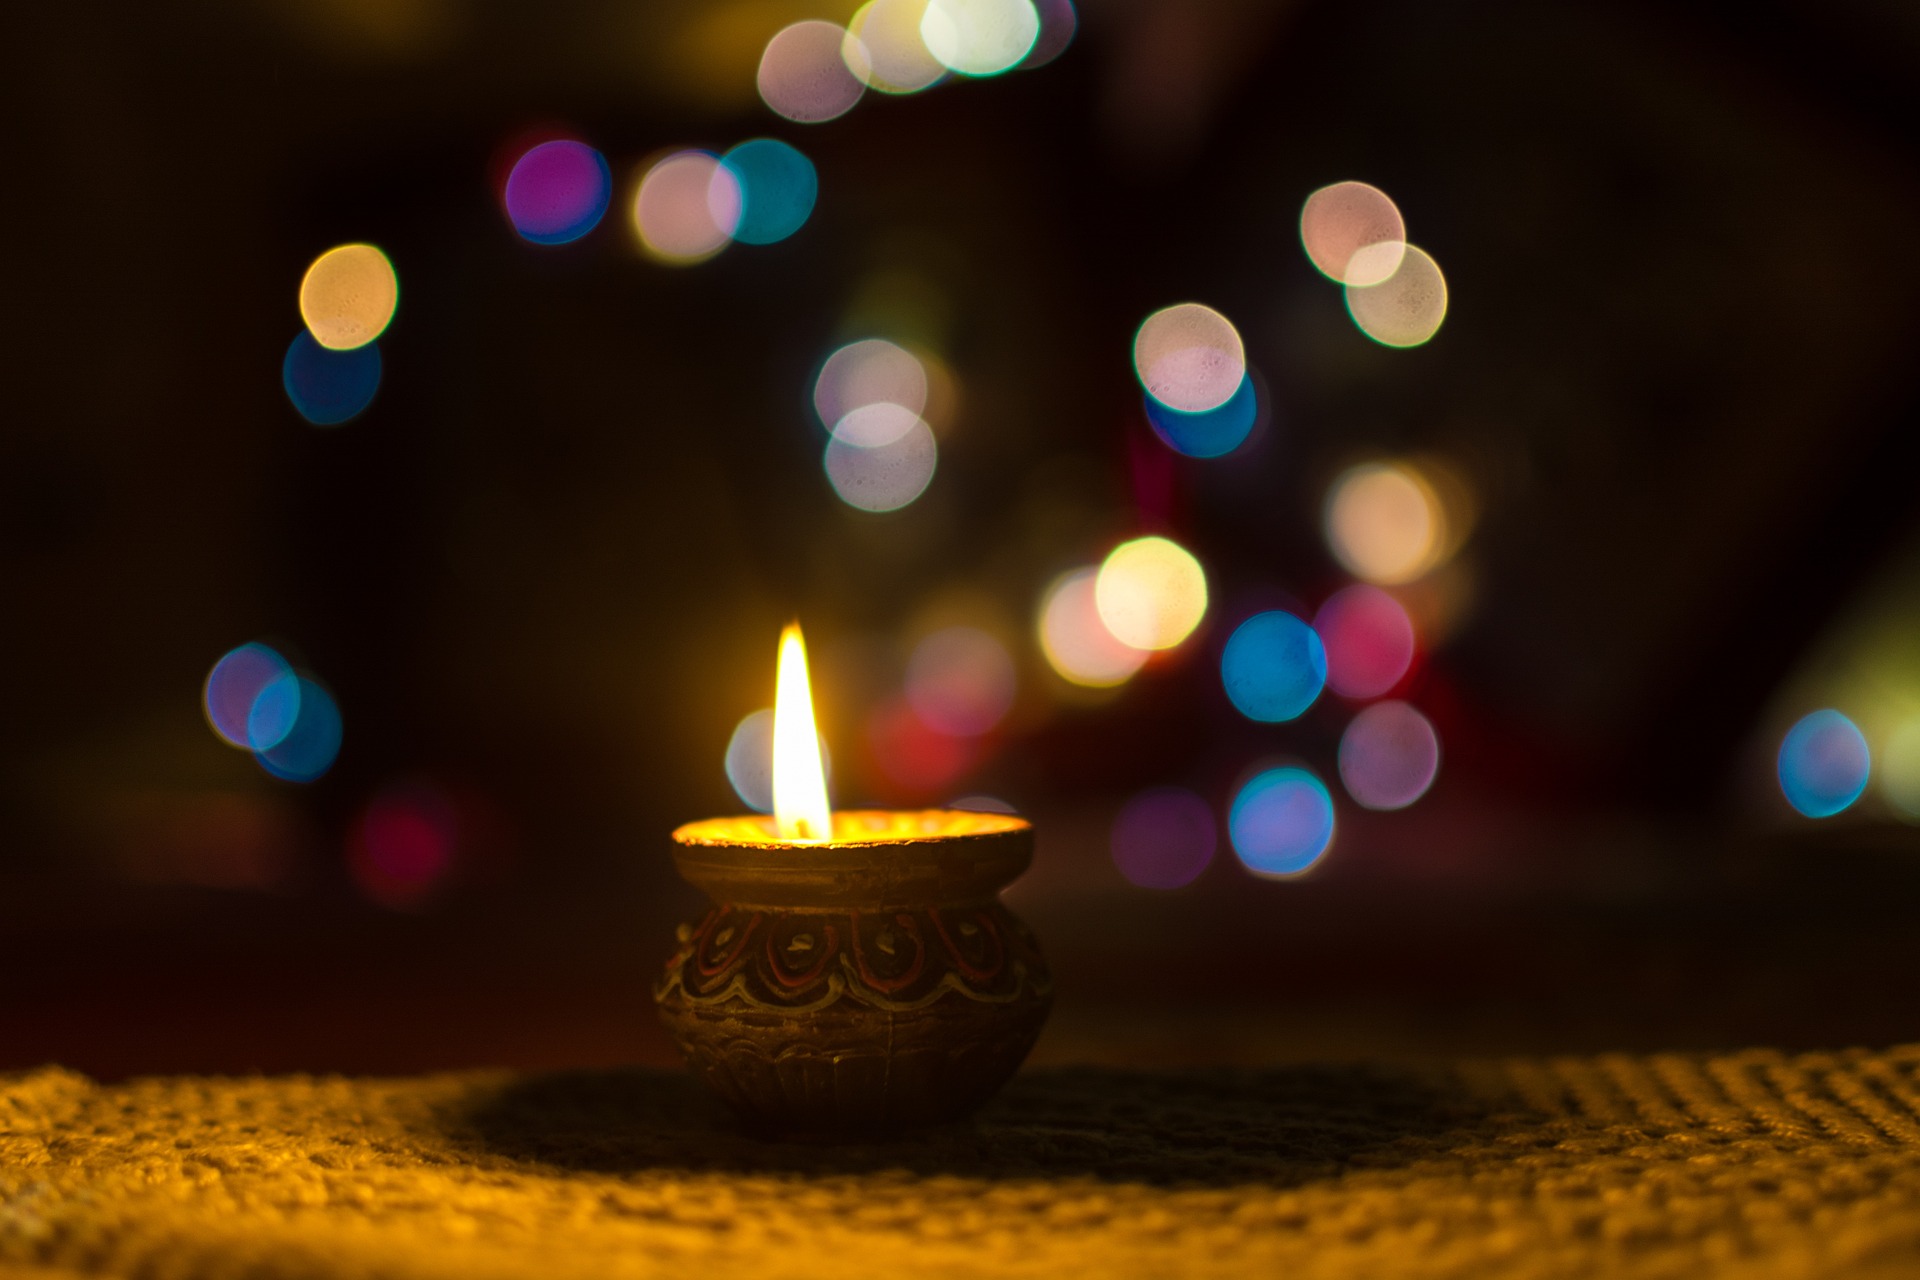 Celebrations for Diwali, the Festival of Lights starting Monday